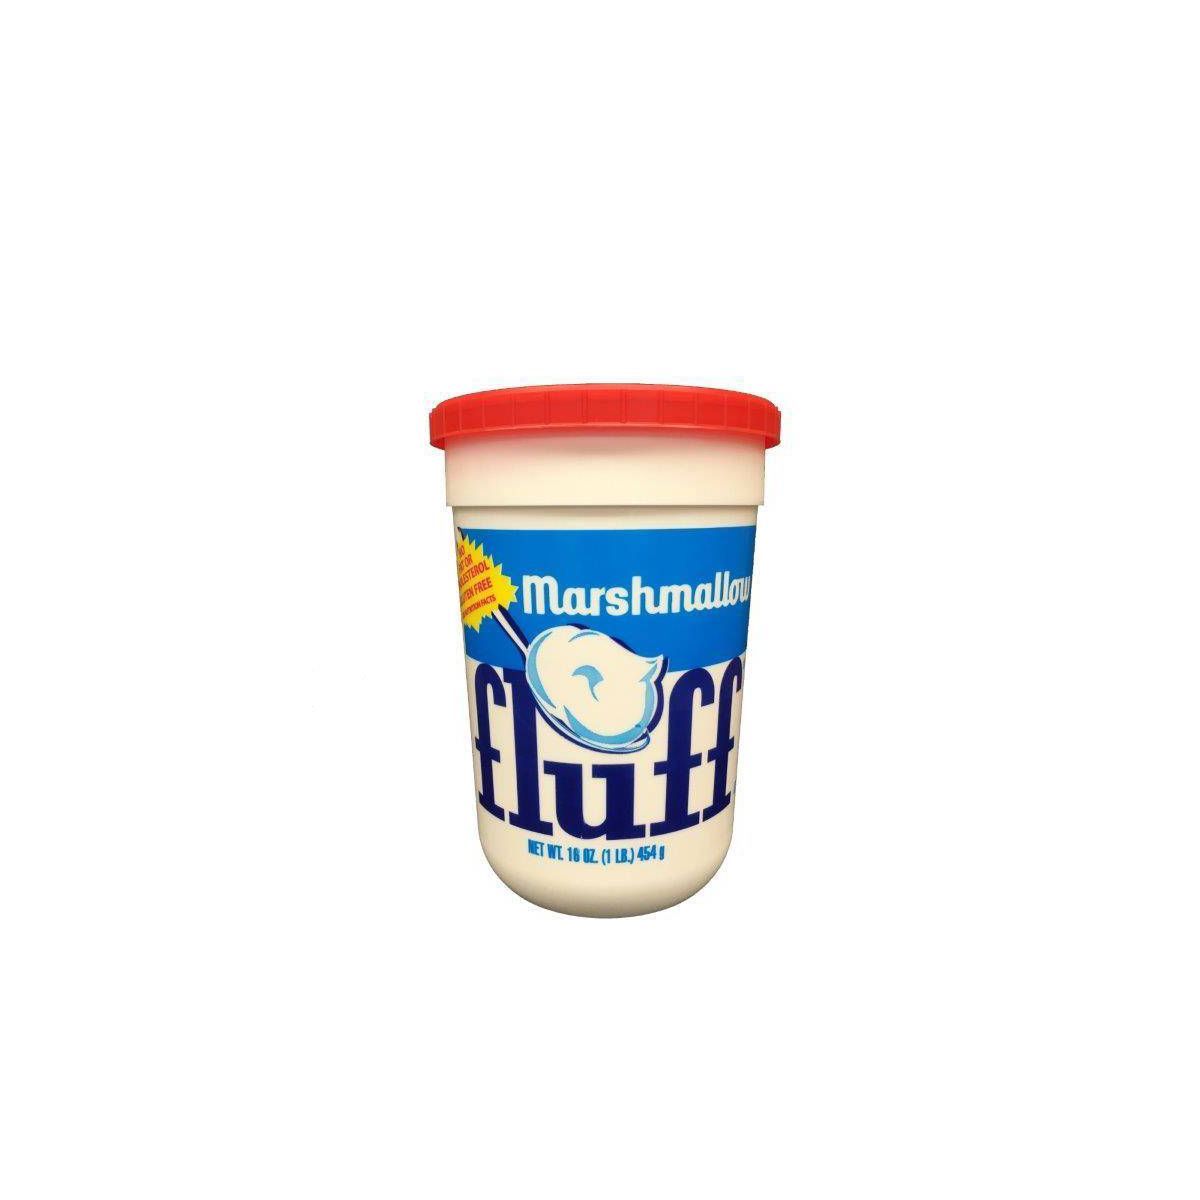 Marshmallow Fluff Frosting - 16oz | Target